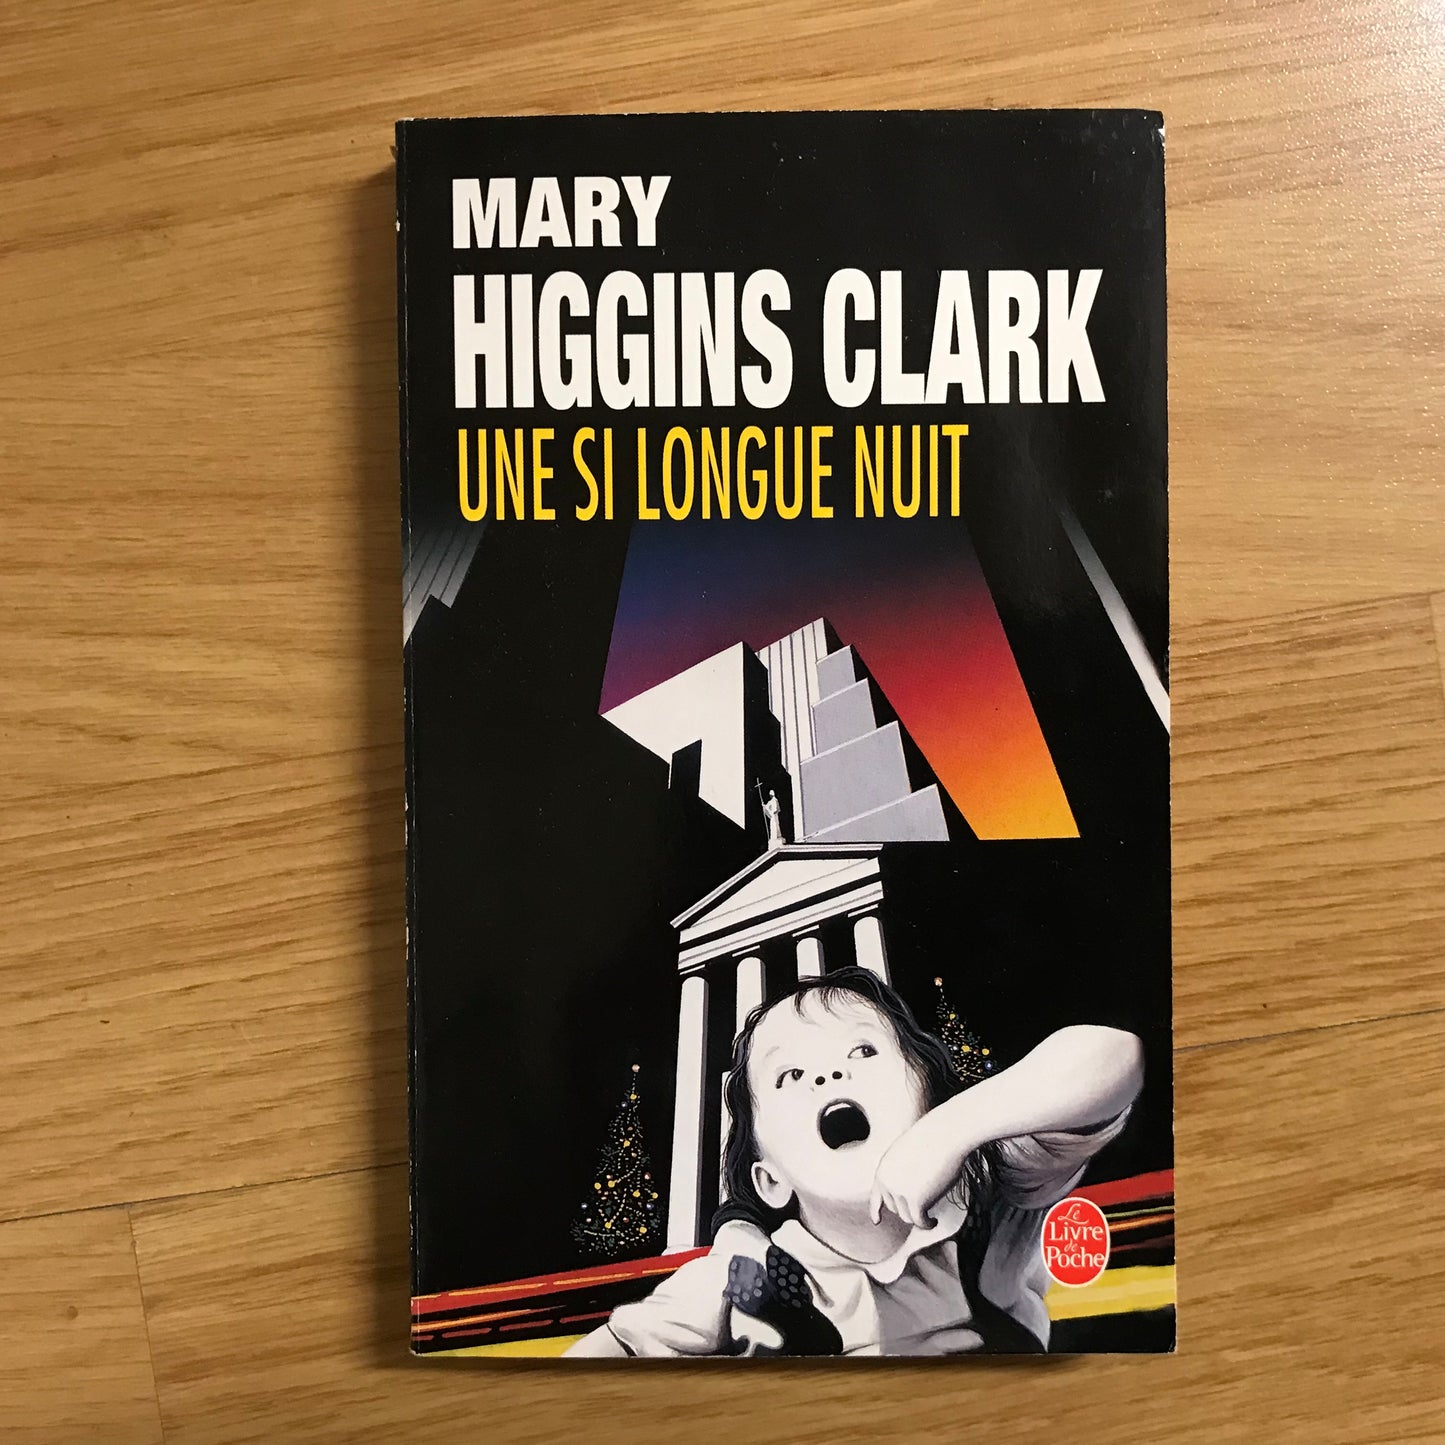 Higgins Clark, Mary - Une si longue nuit